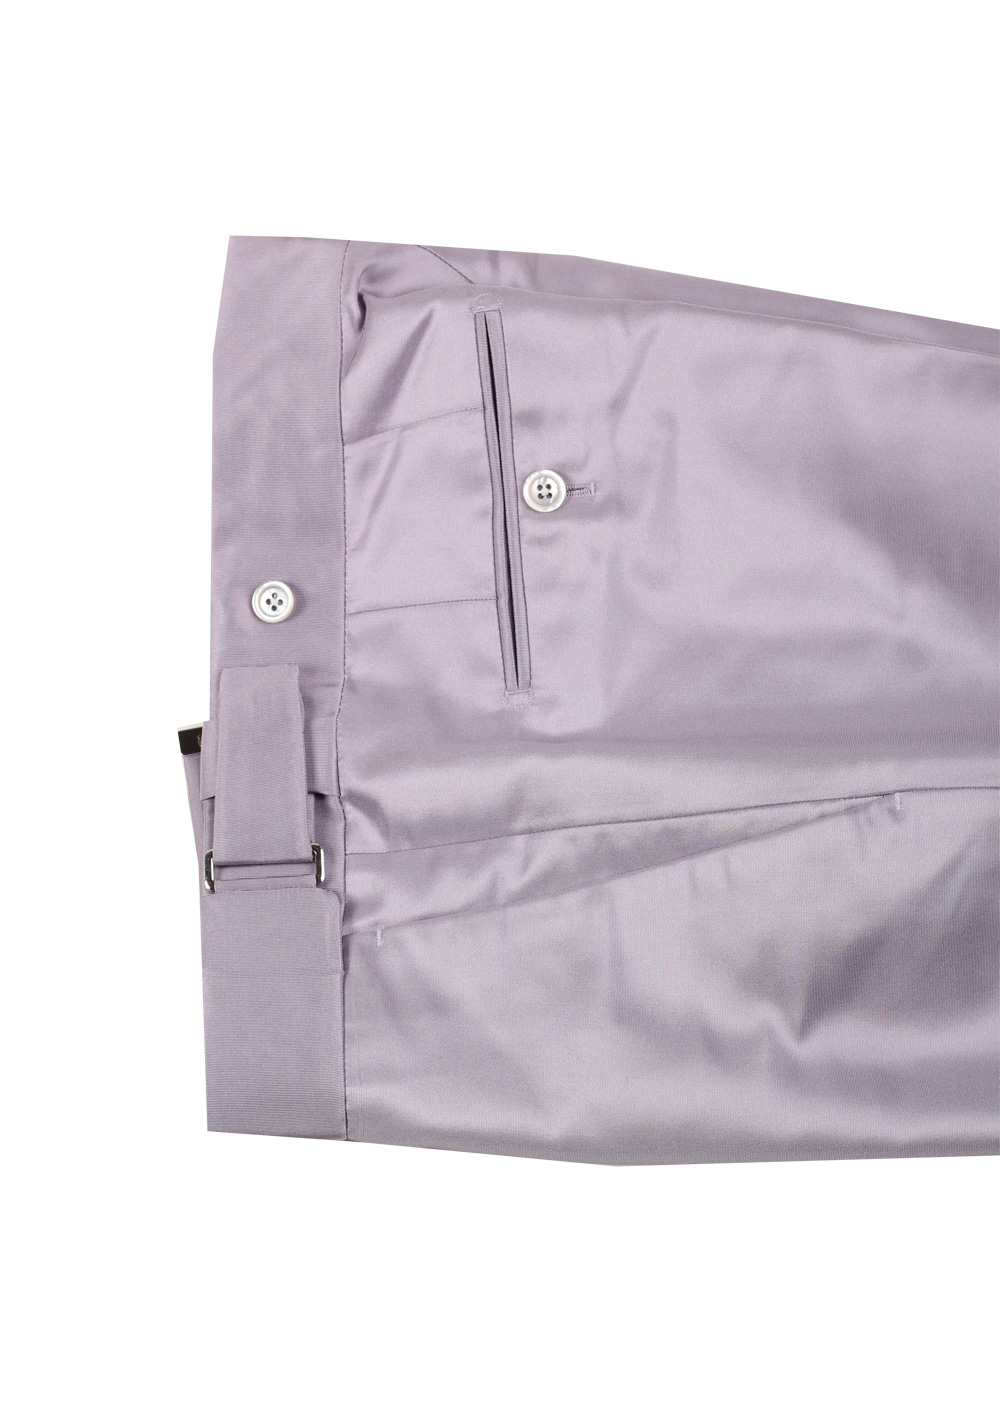 TOM FORD Atticus Lilac Silk Suit Size 46 / 36R U.S. | Costume Limité